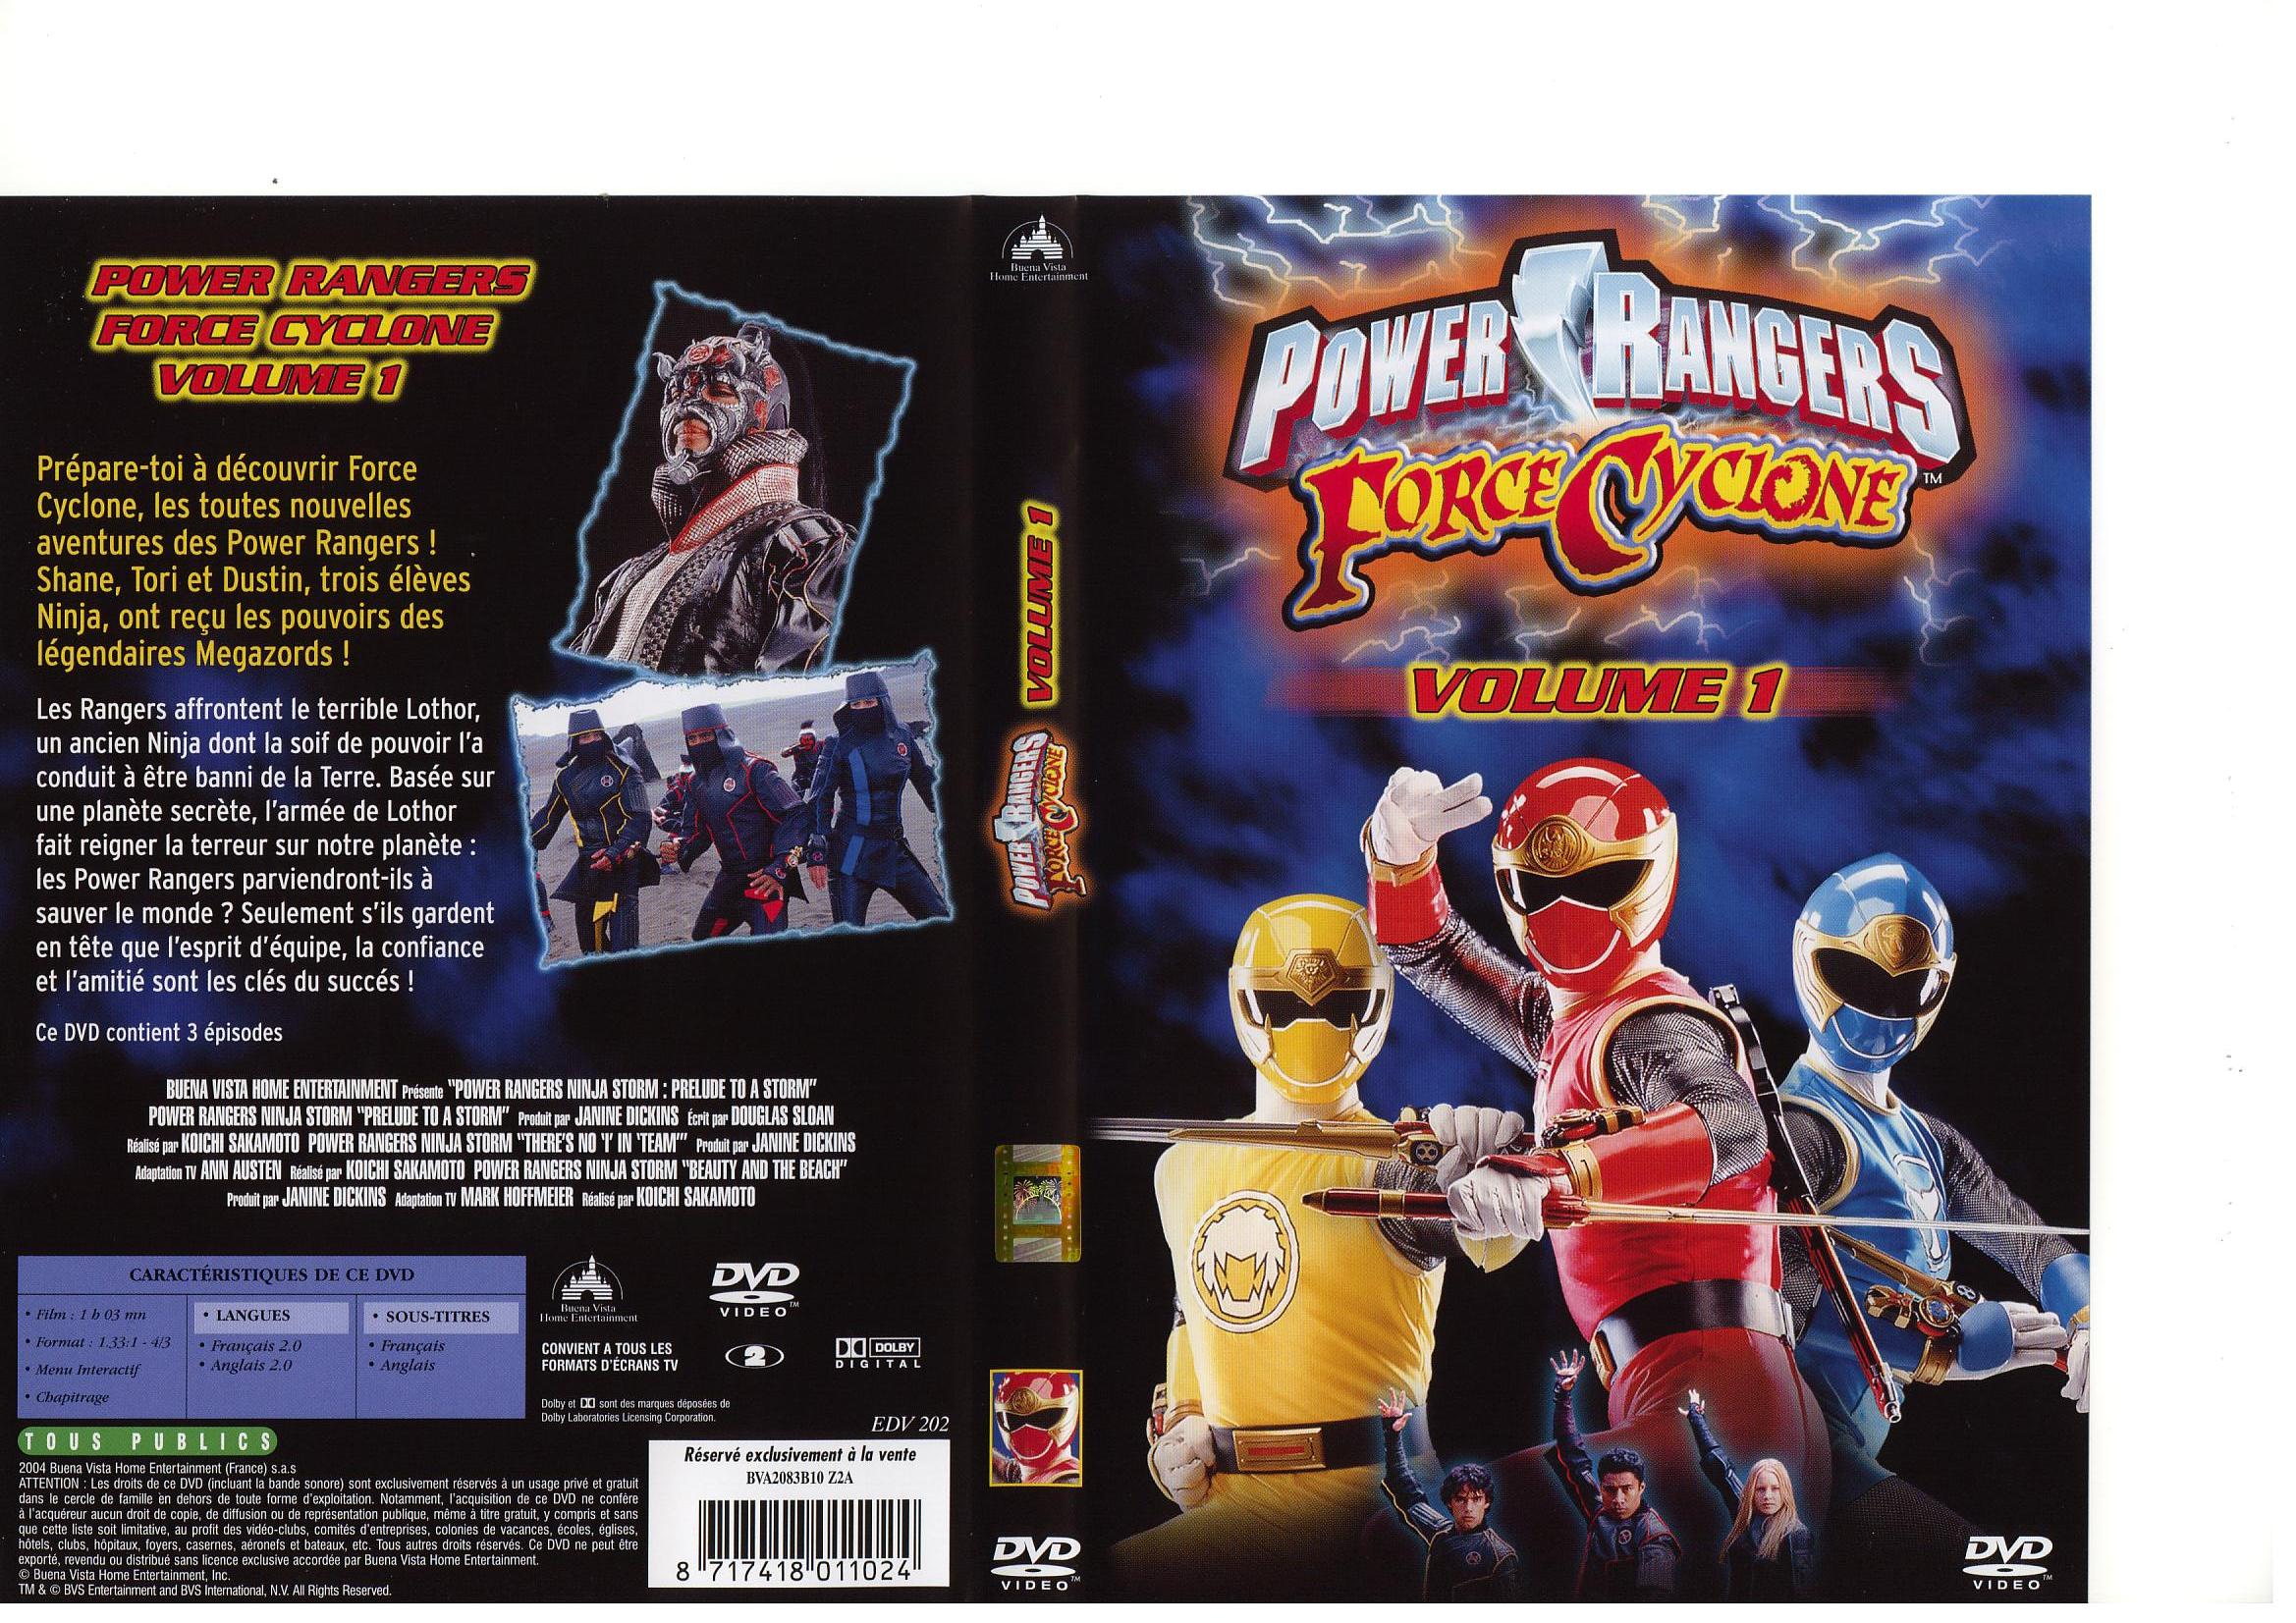 Jaquette DVD Power rangers vol 1